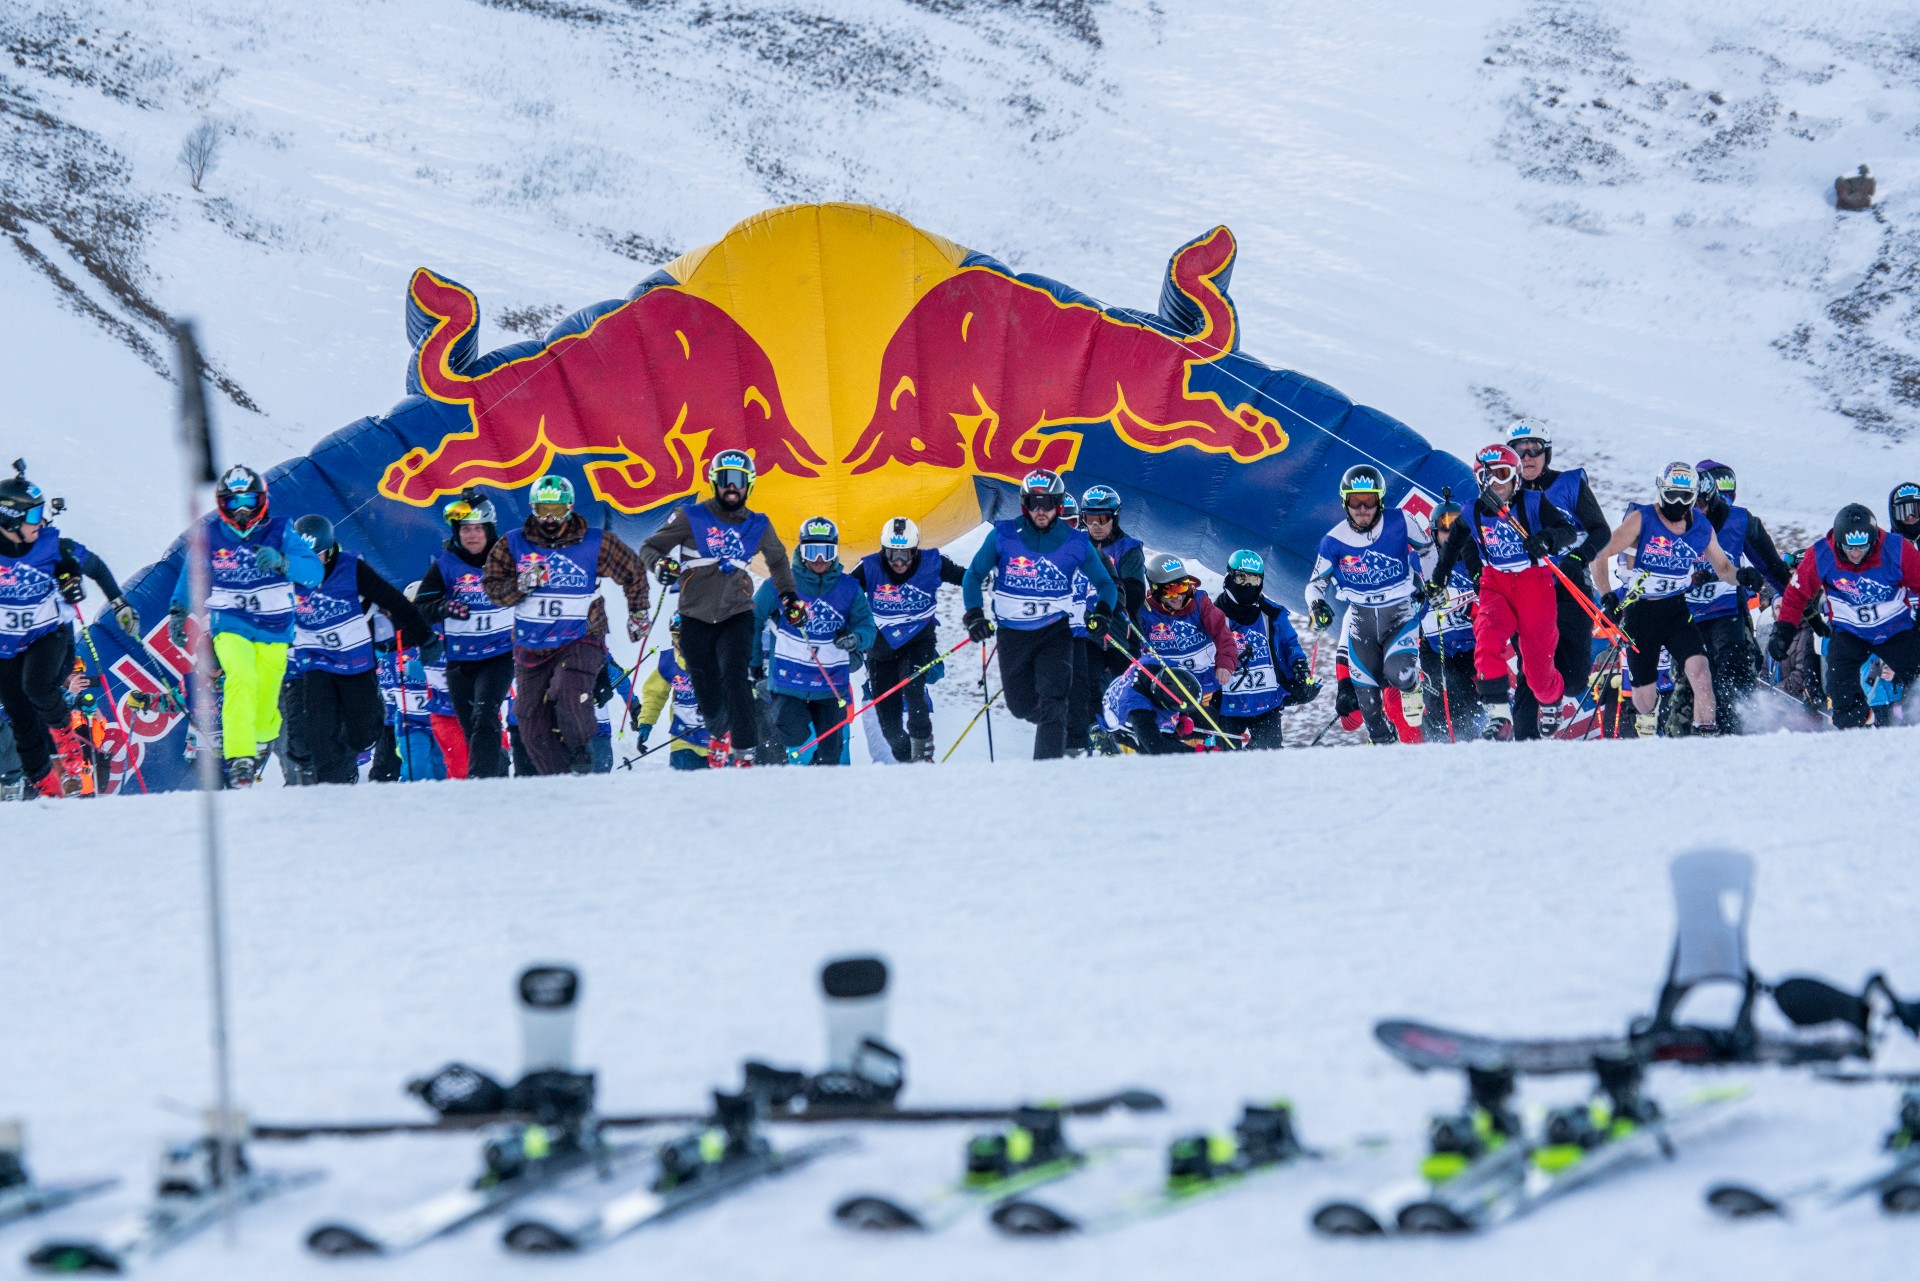 Red Bull Homerun: Ένα εντυπωσιακό event γεμάτο ενέργεια, ενθουσιασμό και πολλή ταχύτητα!